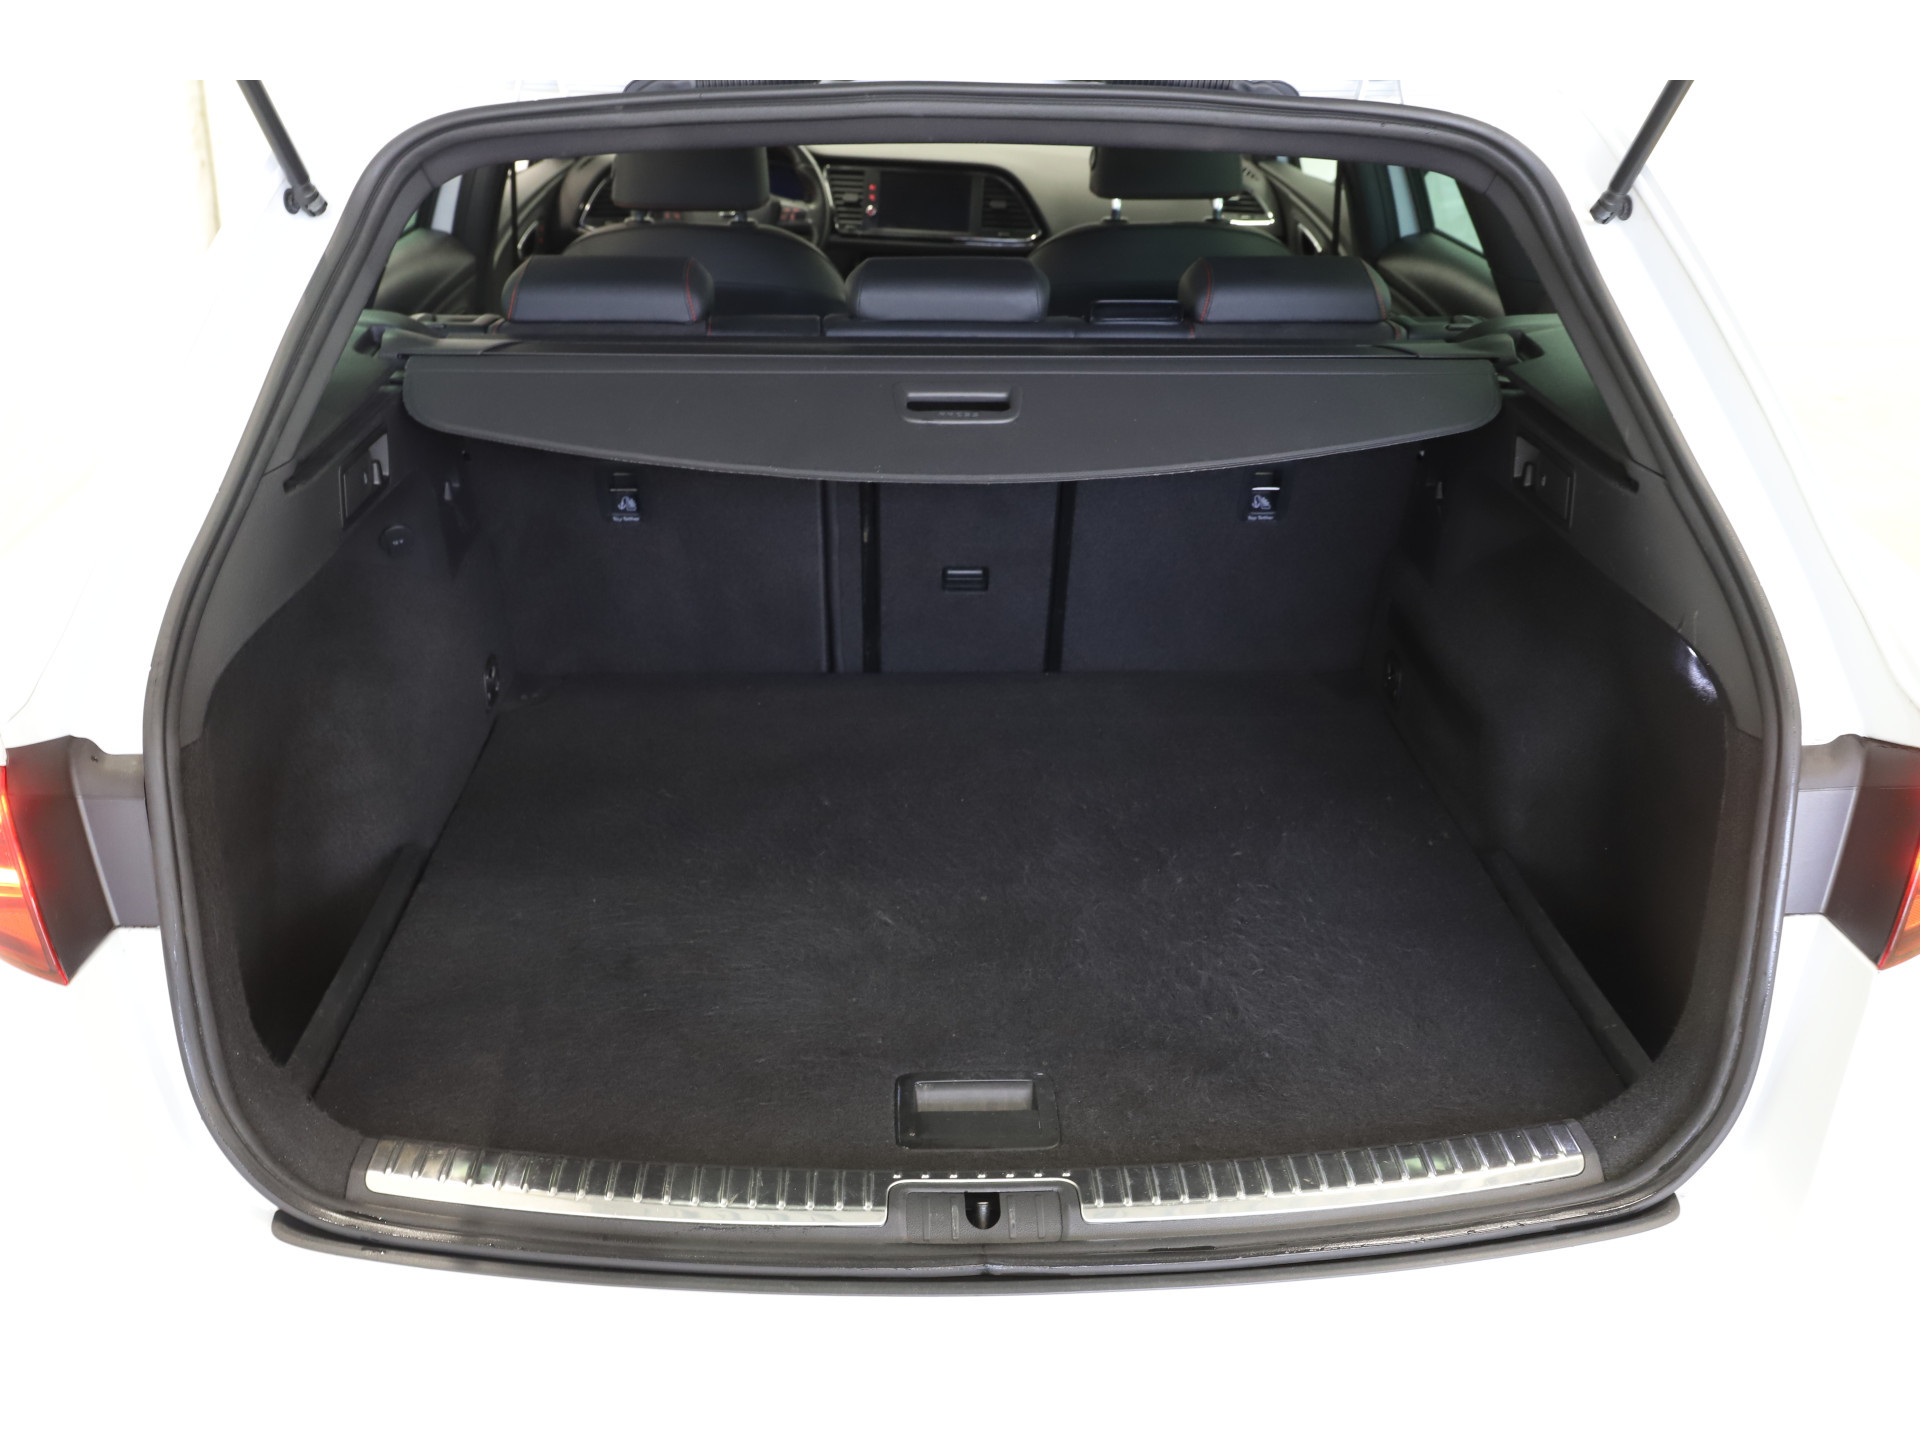 SEAT - León ST 1.5 TSI 150pk DSG FR Ultimate Edition - 2019